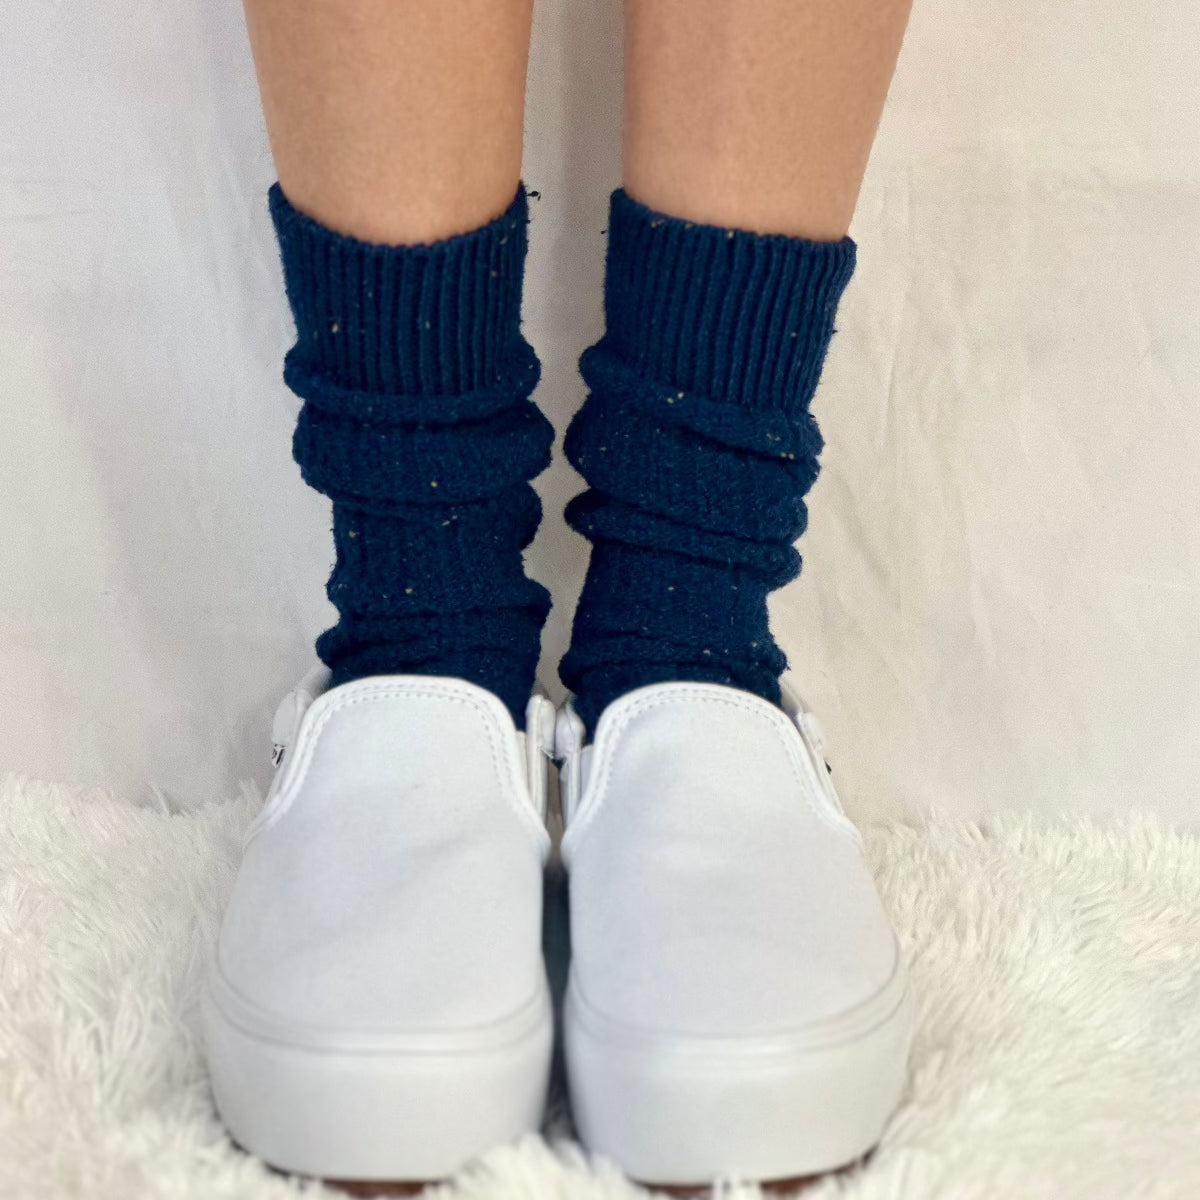 essentials besy quality cotton boot socks women, Made USA short ankle socks.